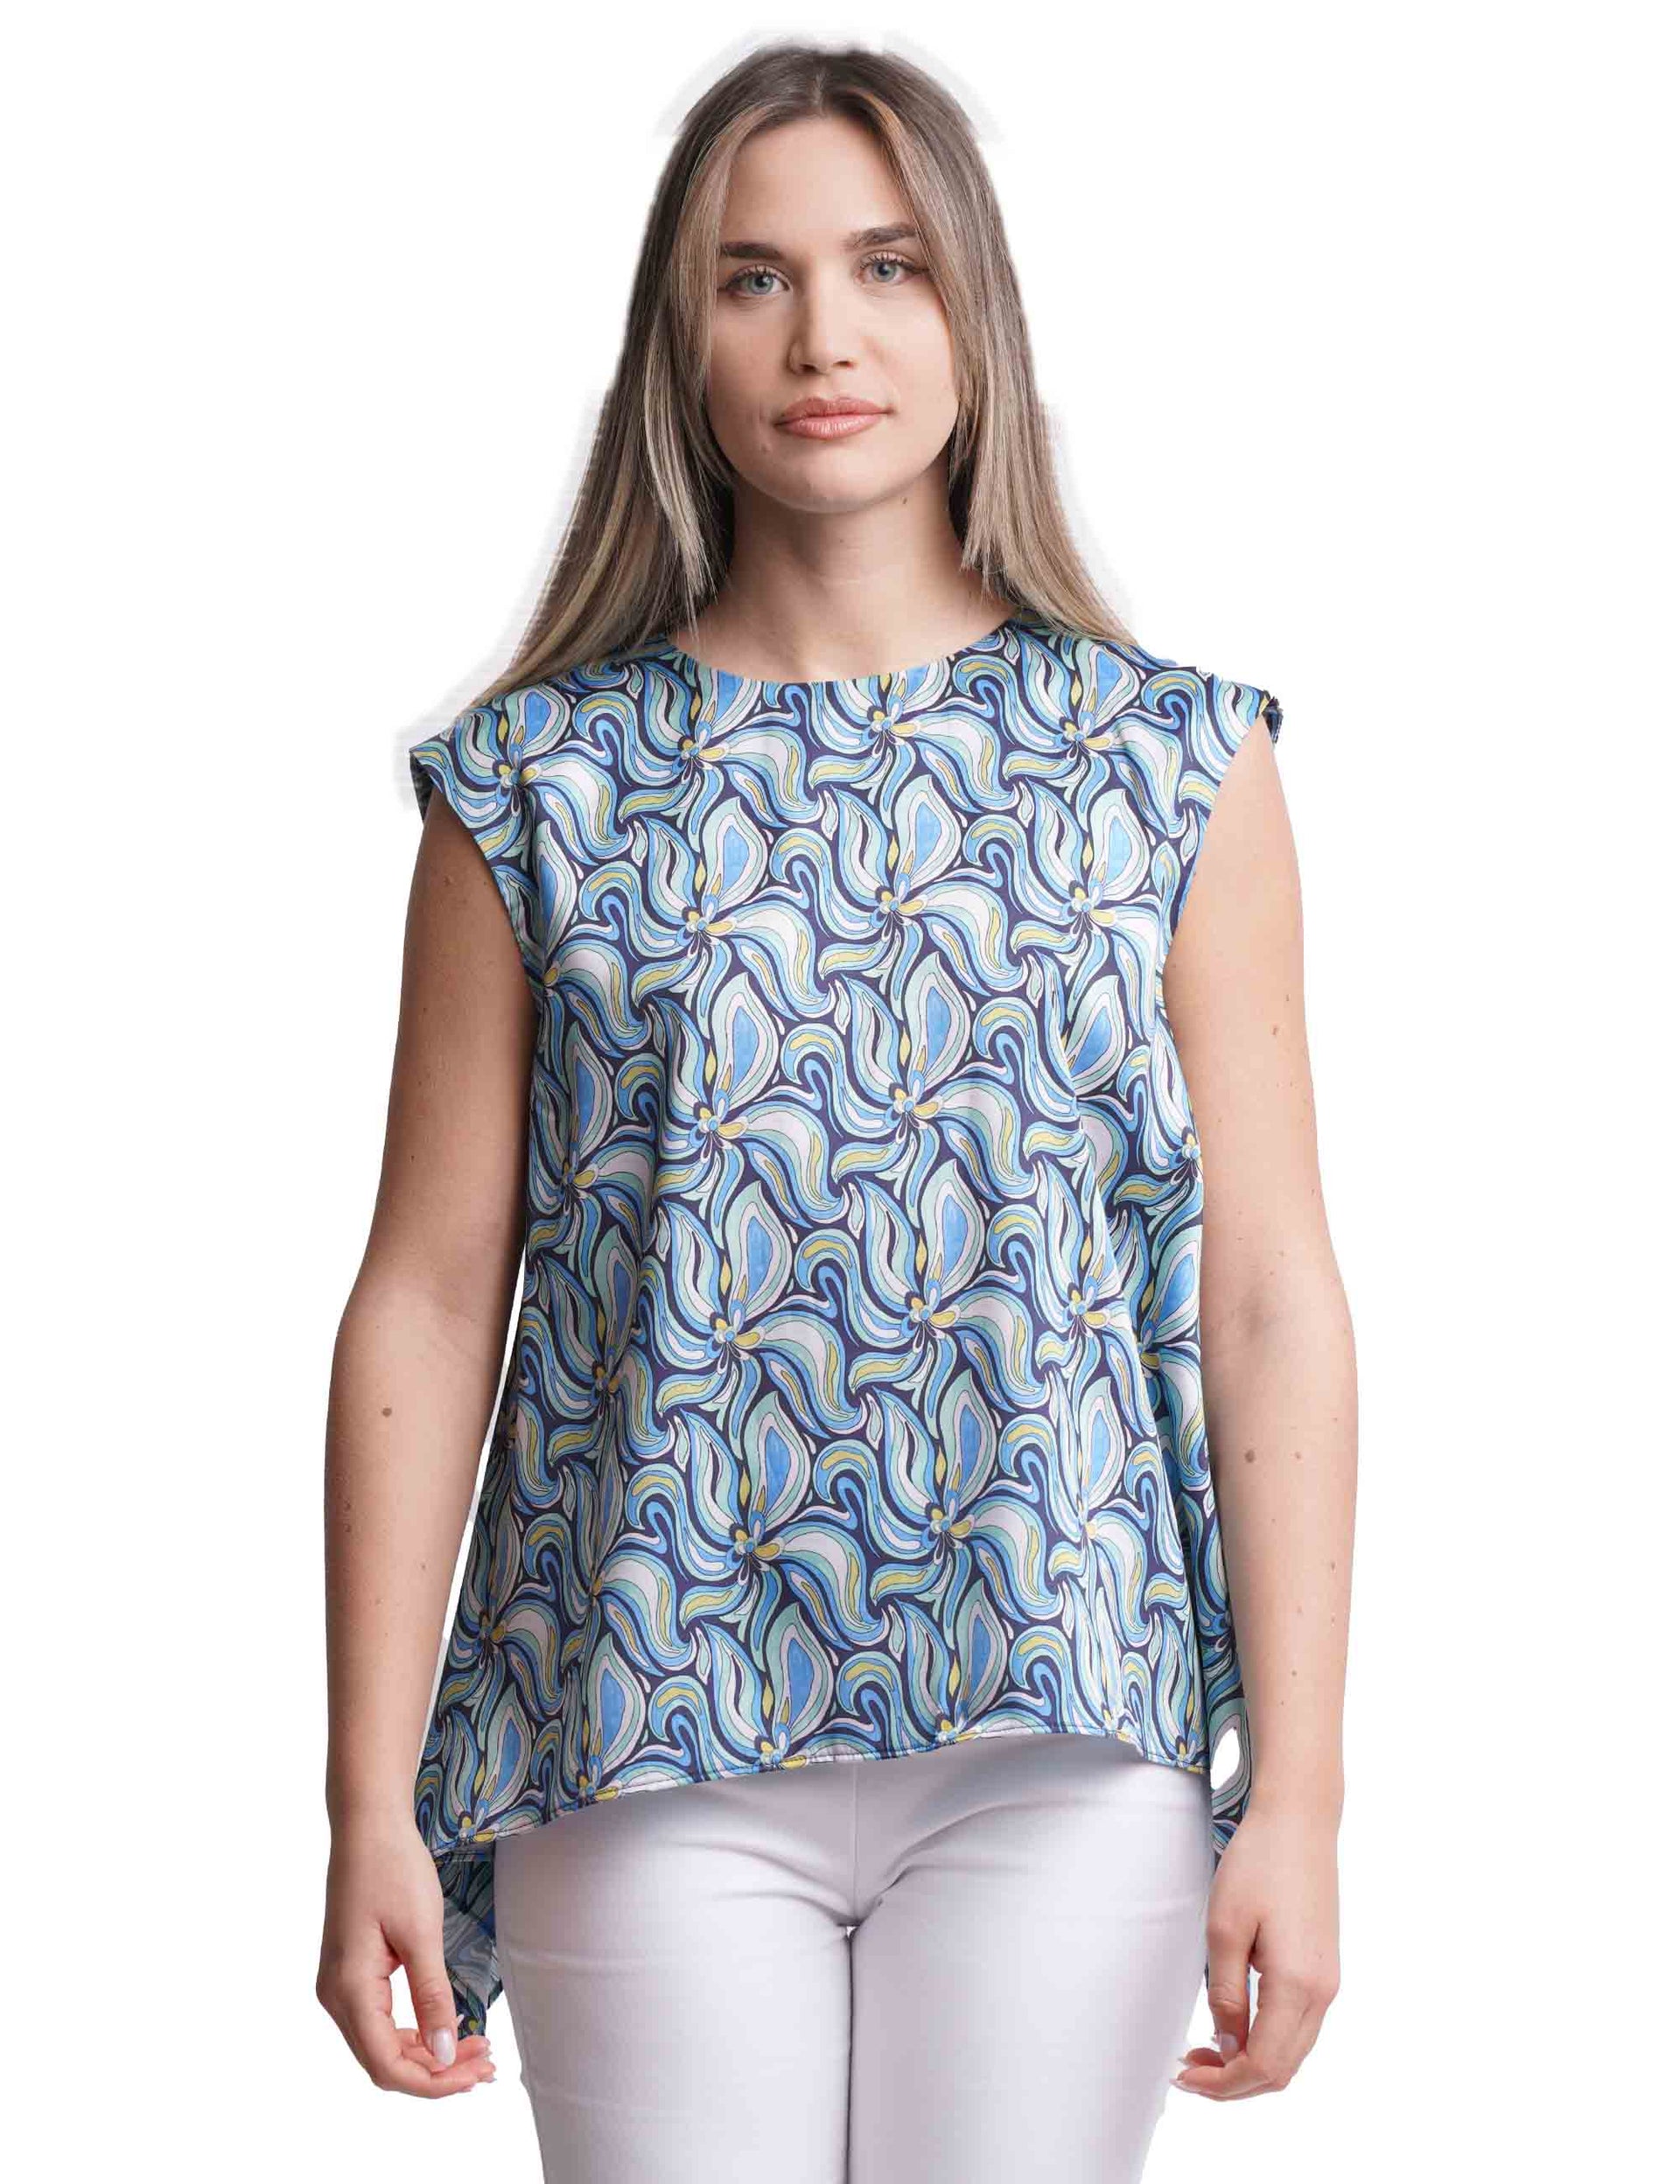 Zephir Print women's tank top in blue twill fabric